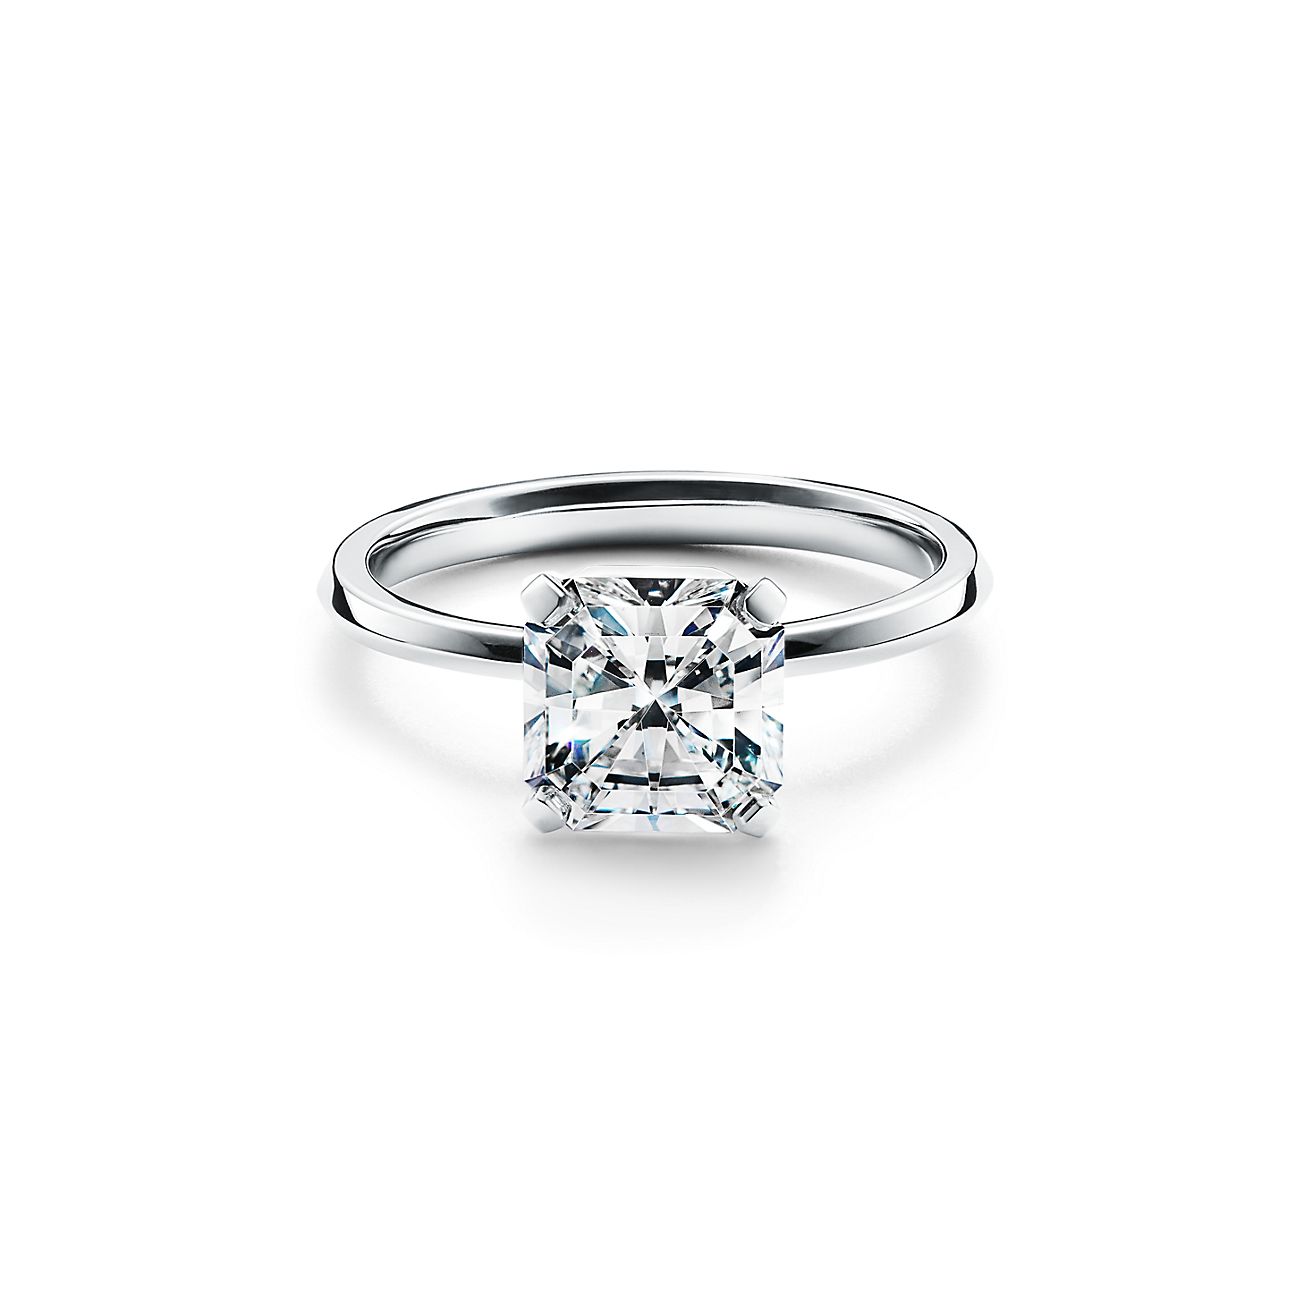 Tiffany True® Engagement Ring with a Tiffany True® Diamond in